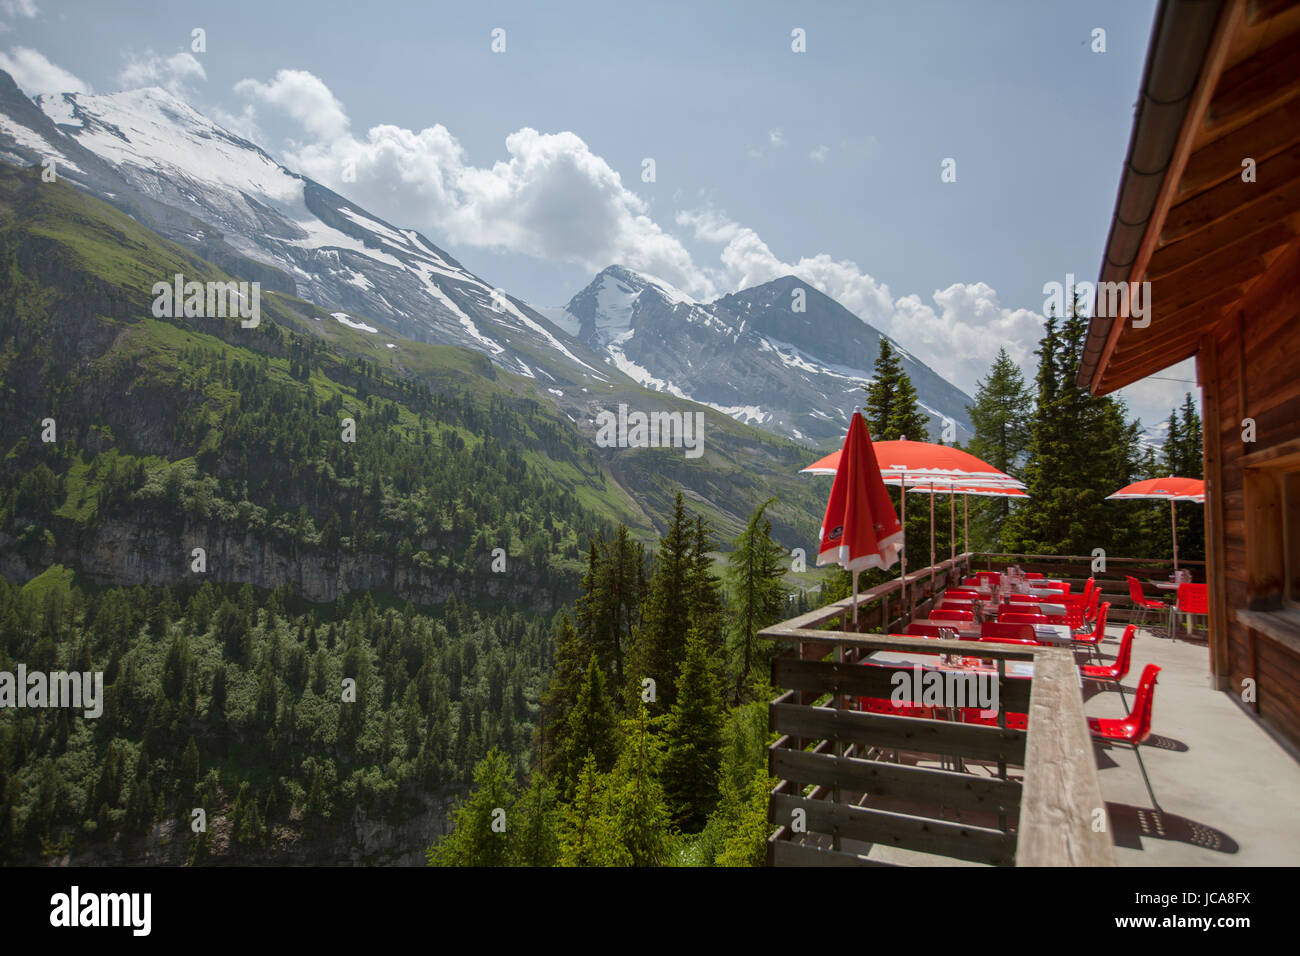 A lodge deck with red umbrellas overlooks the Swiss Alps.  Kandersteg, Switzerland. Stock Photo